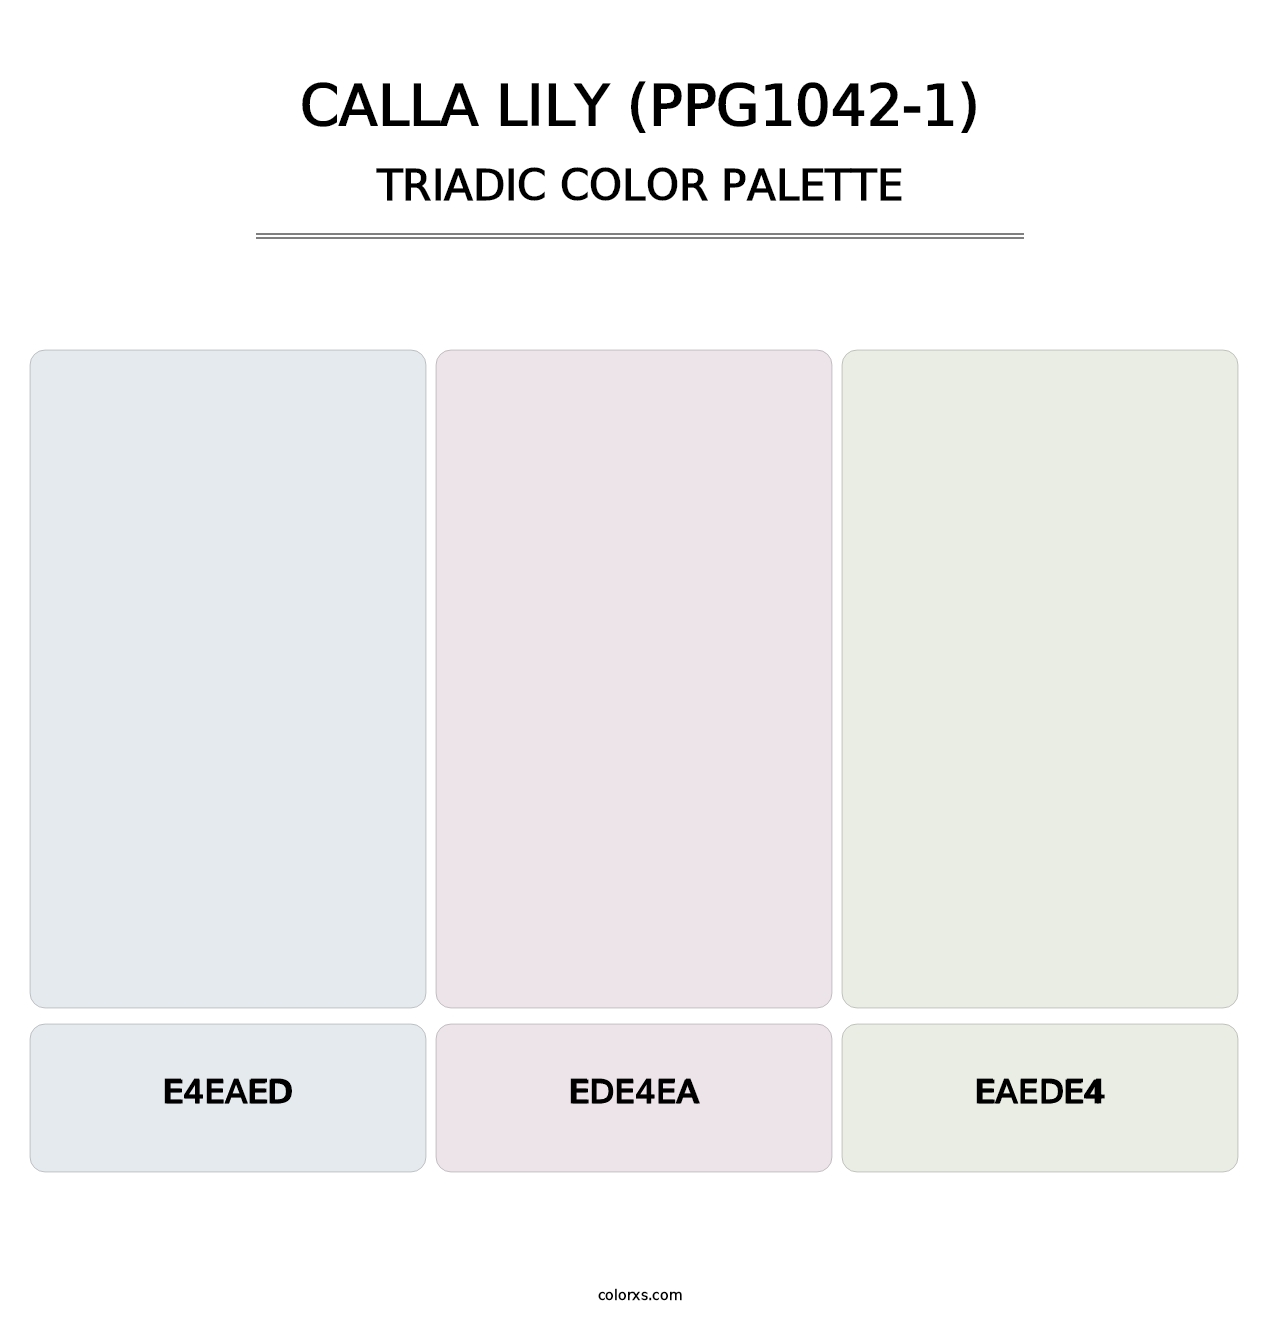 Calla Lily (PPG1042-1) - Triadic Color Palette